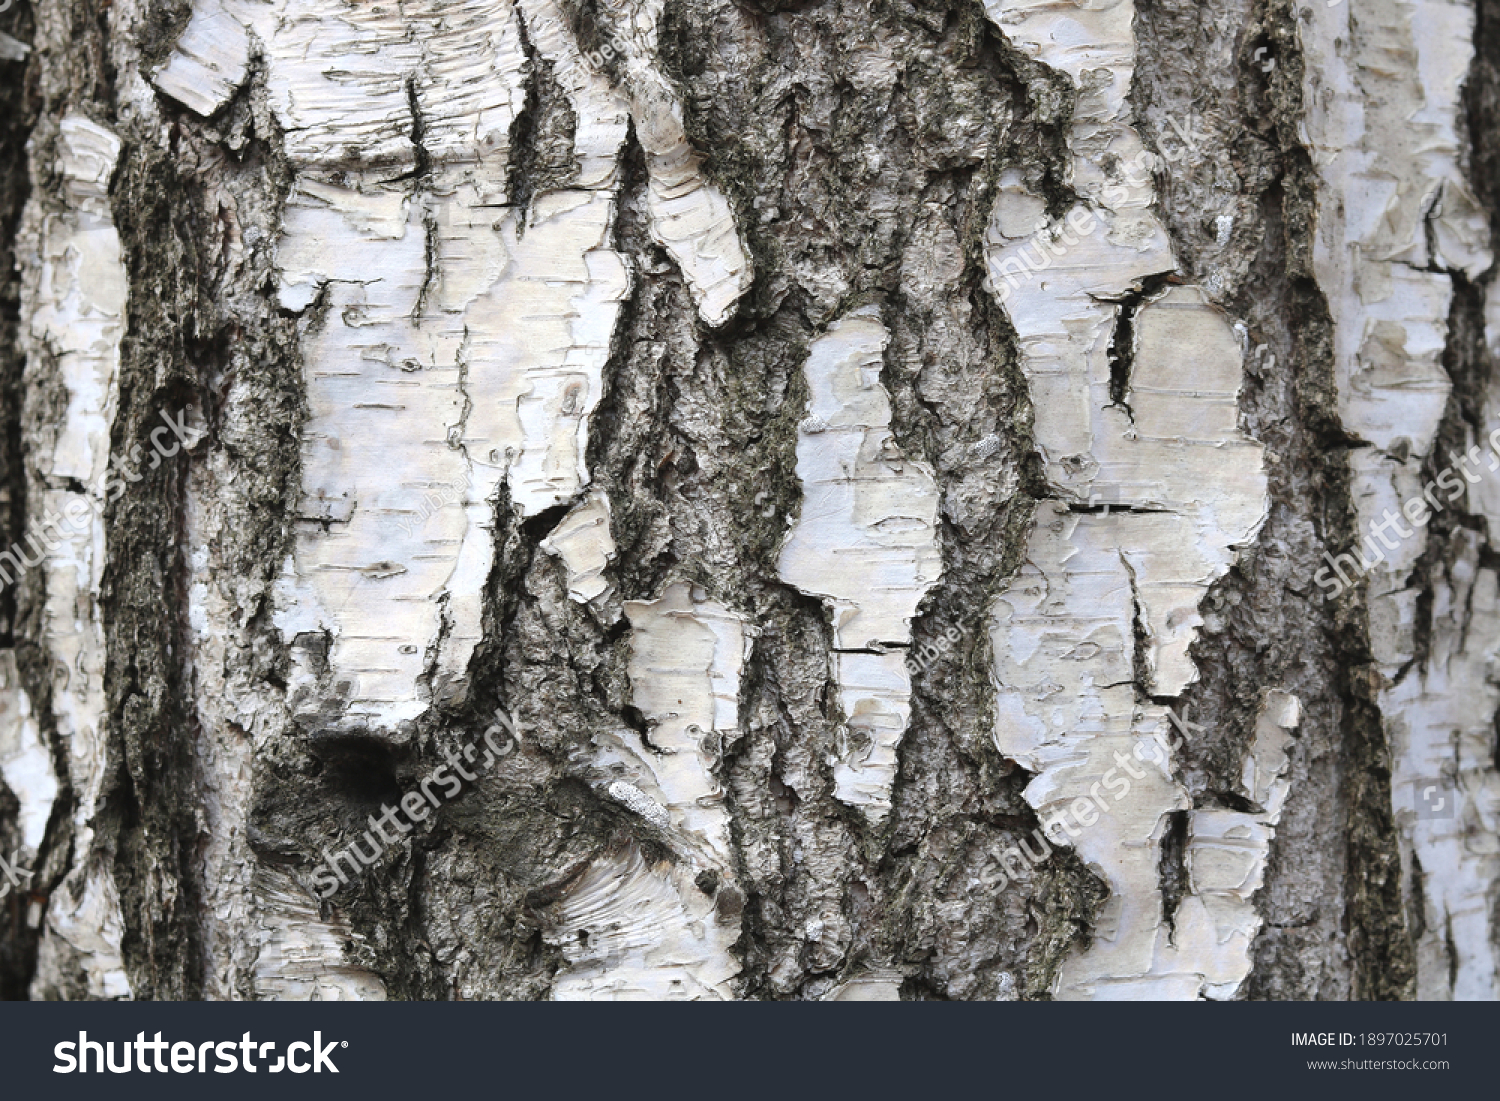 pattern of birch bark with black birch stripes on white birch bark and with wooden birch bark texture #1897025701